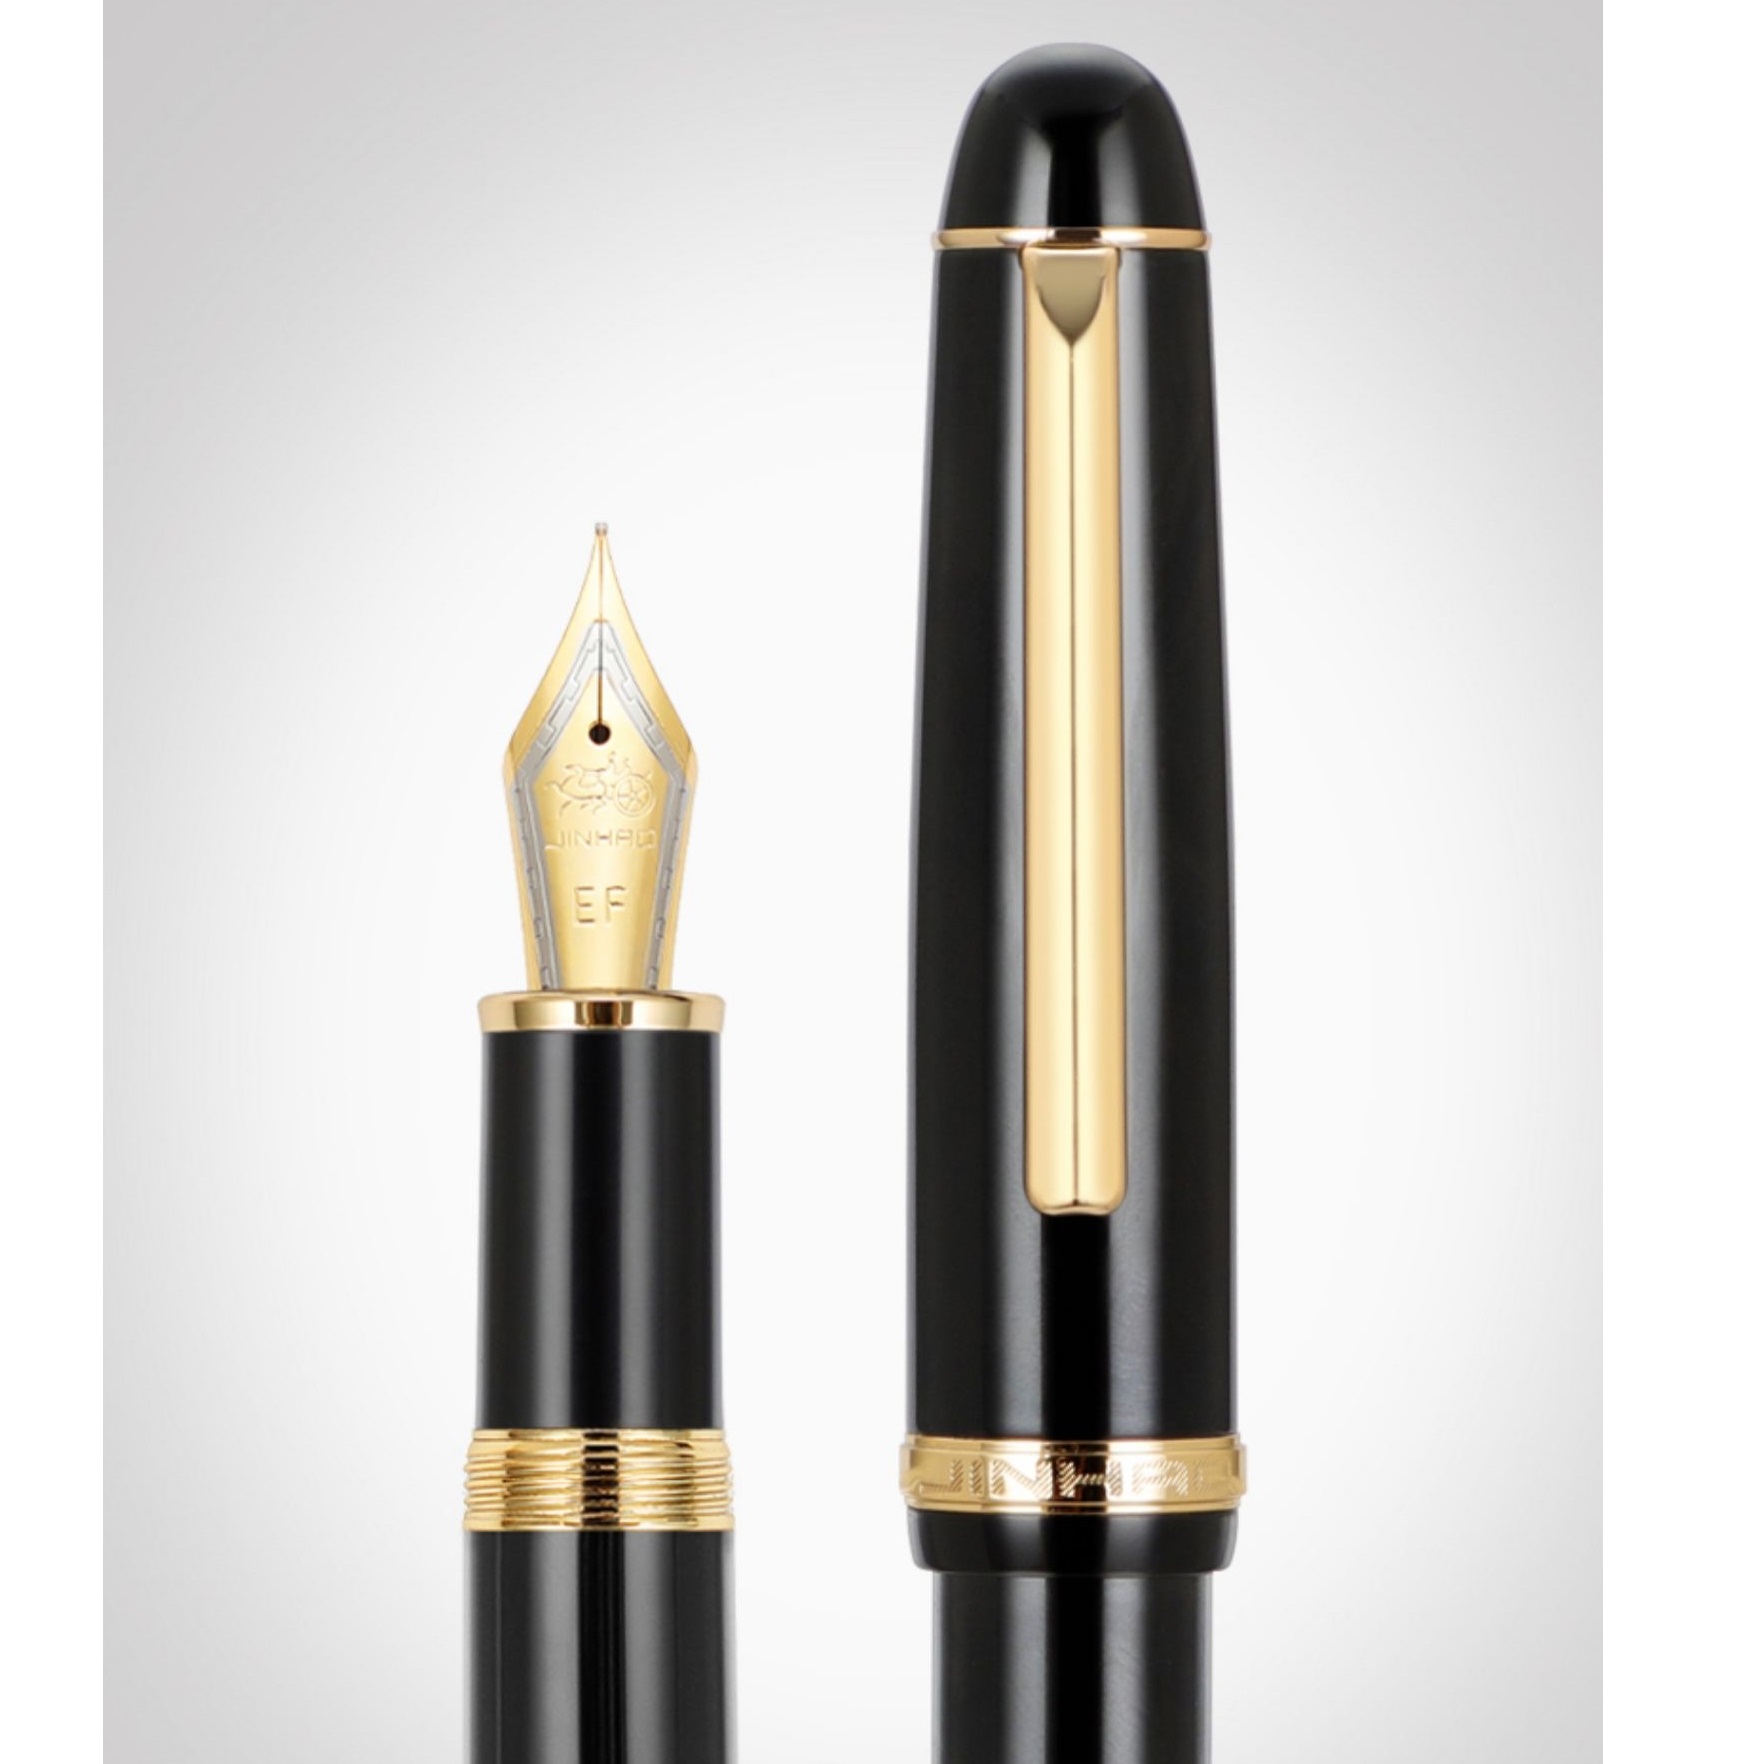 Jinhao X350 Penna Fontana Retro Elegante Clip Gold Gold Fine / Medium per scrivere Signature Office School A7345